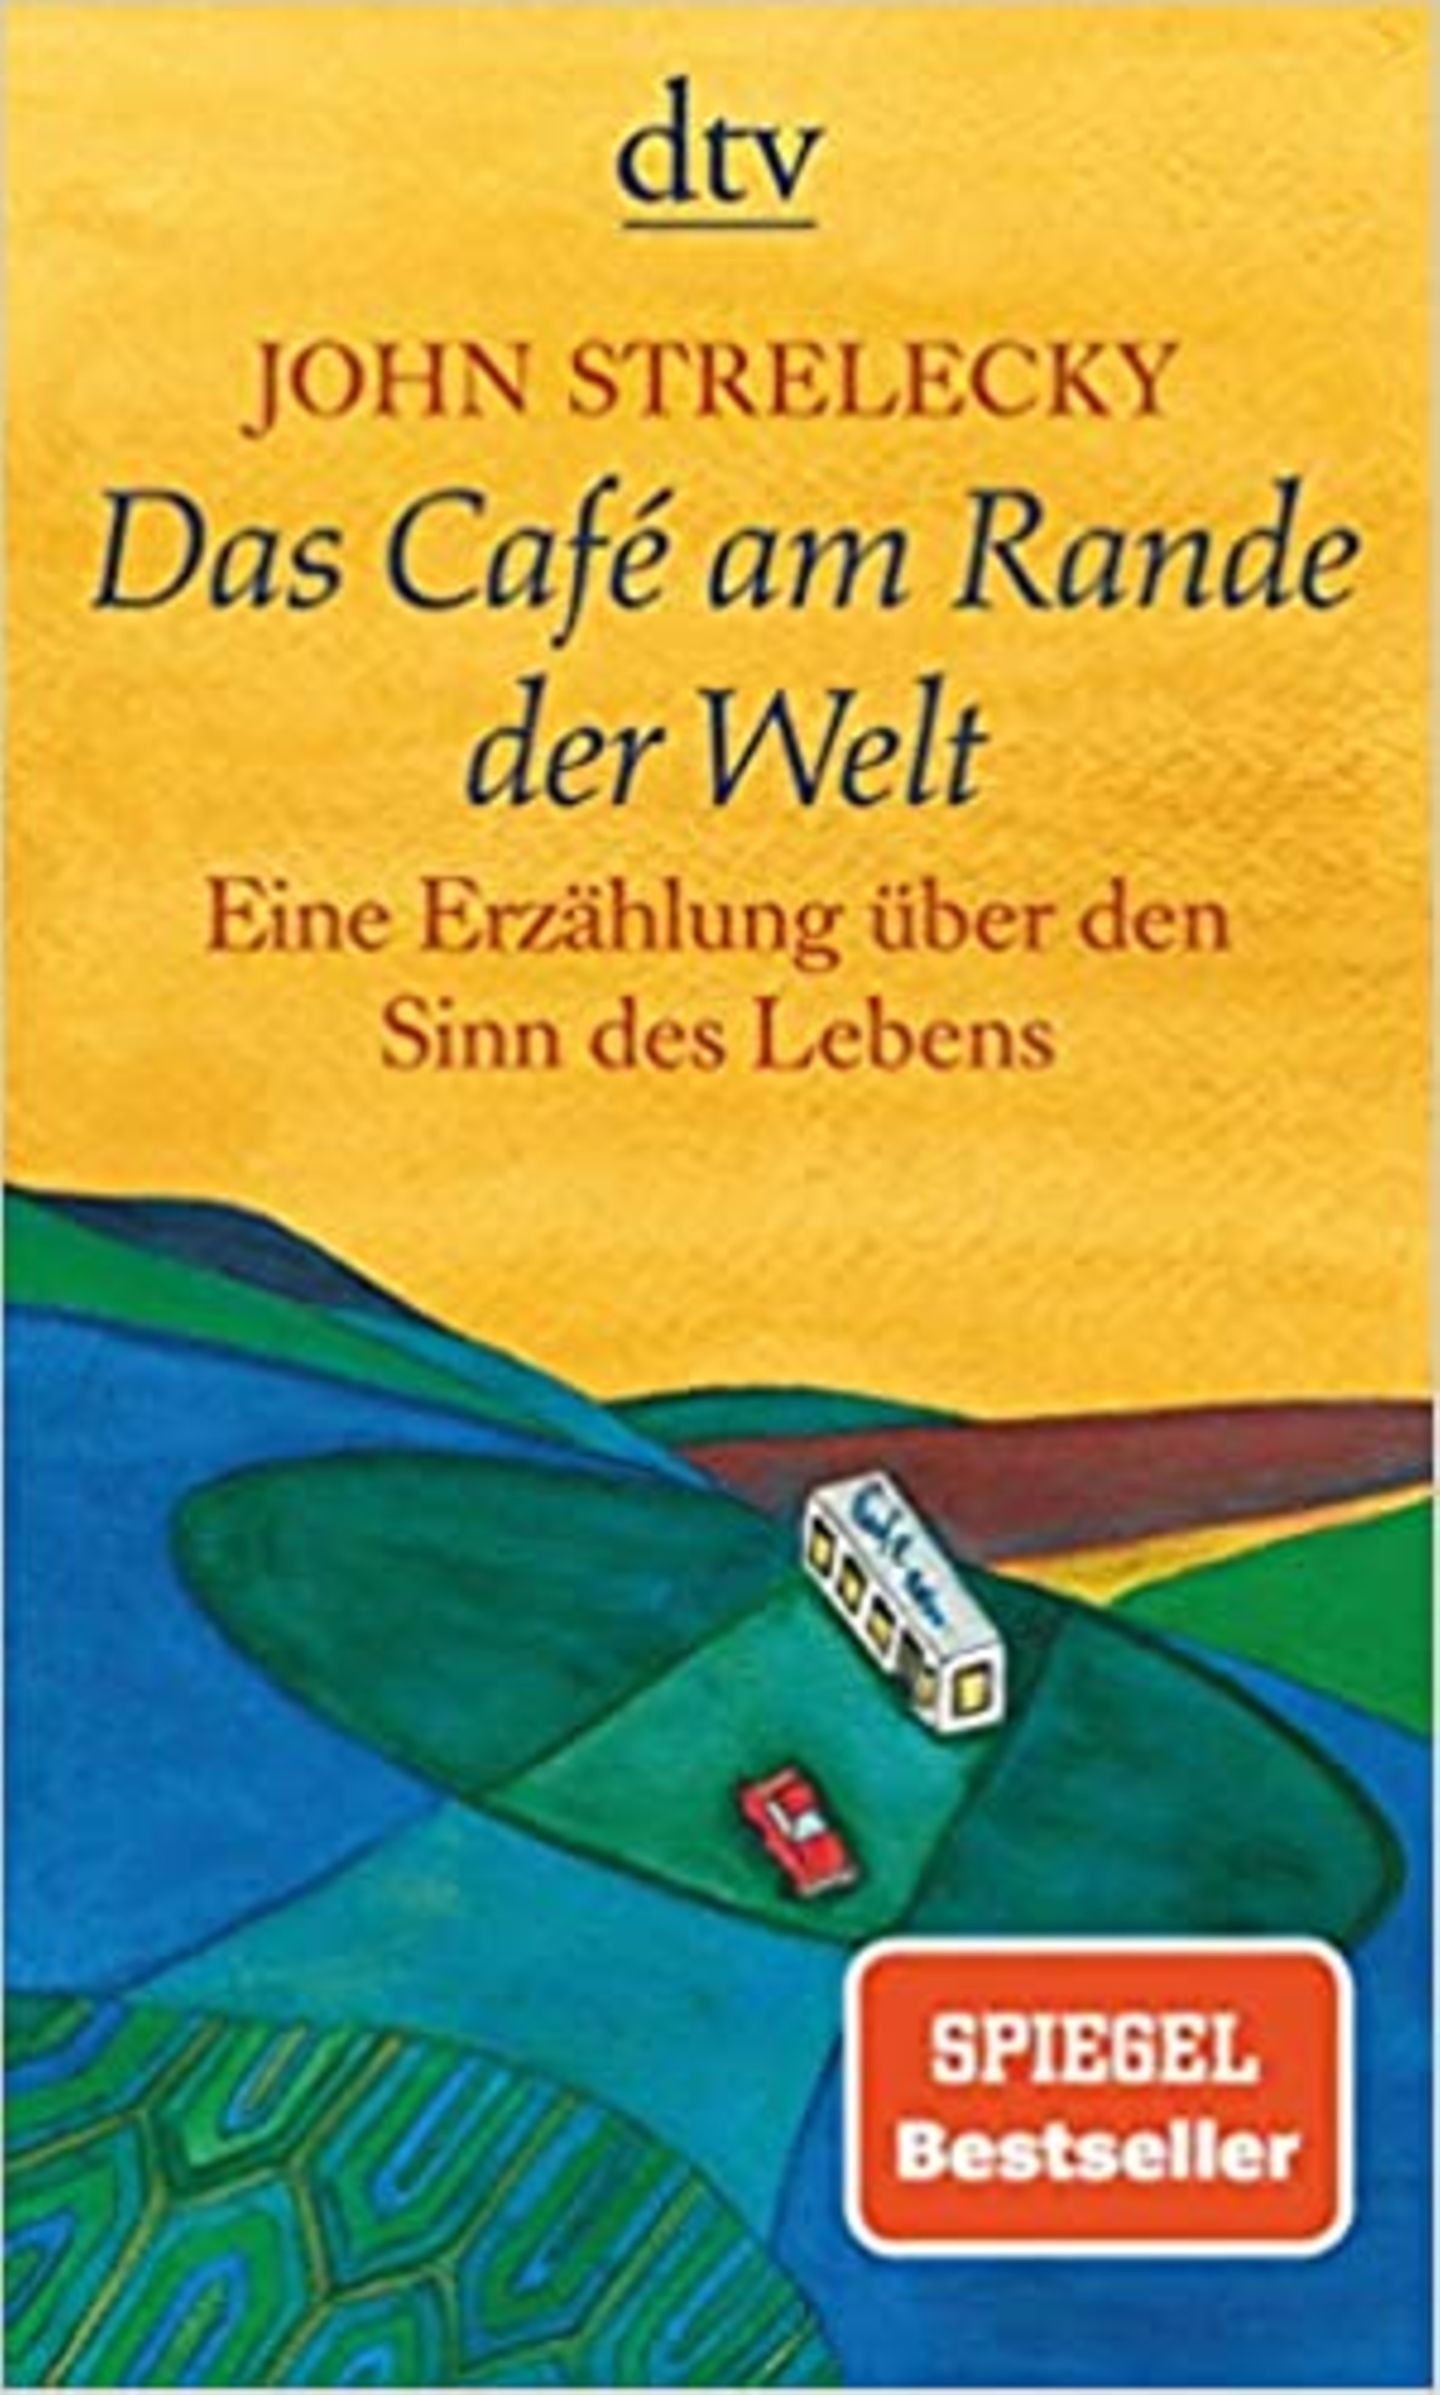 Buch "Das Café am Rande der Welt" von John Strelecky